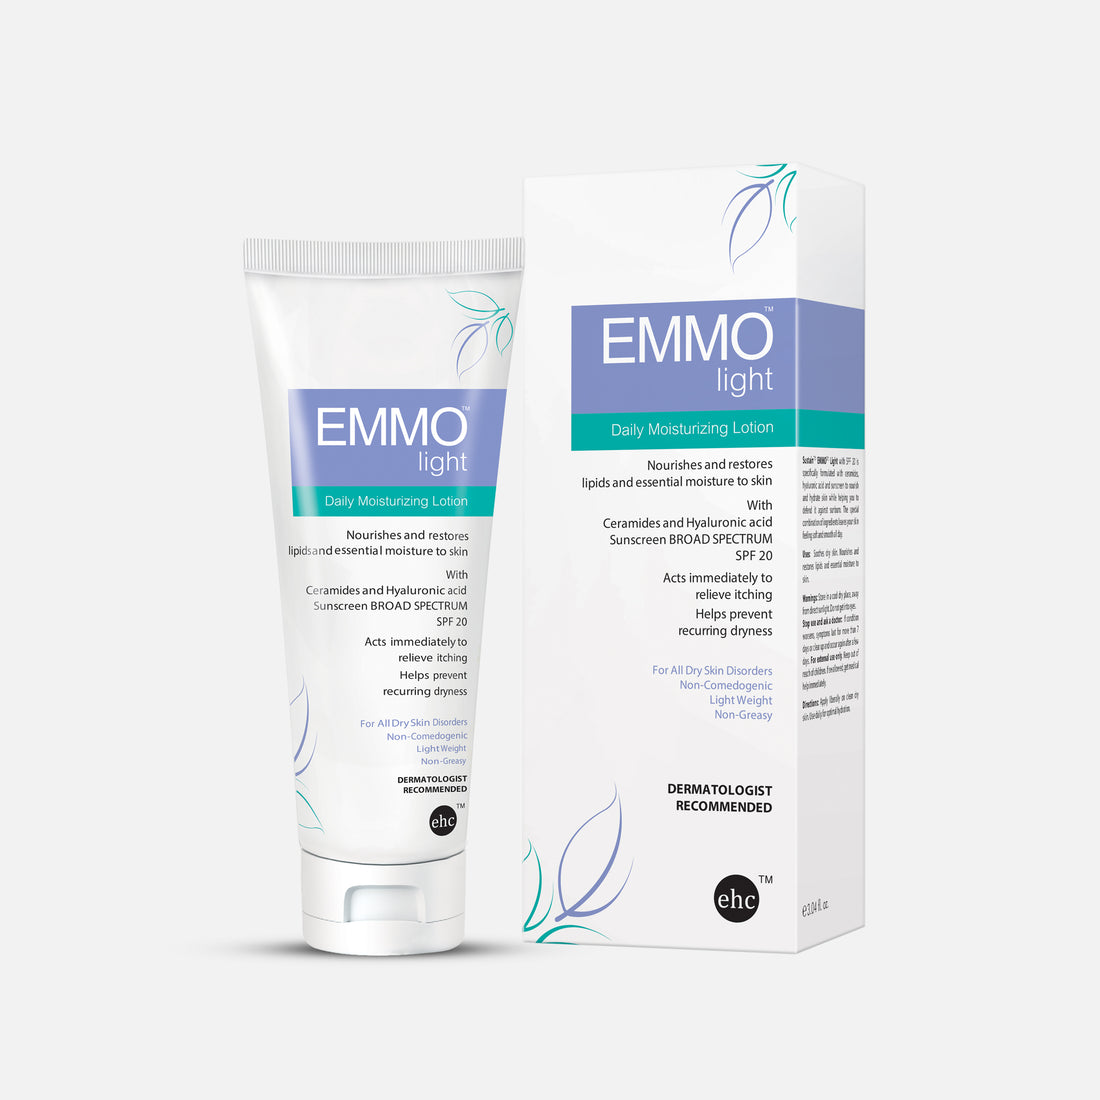 Emmo Light Moisturizing Lotion | Essential Health Care (EHC)